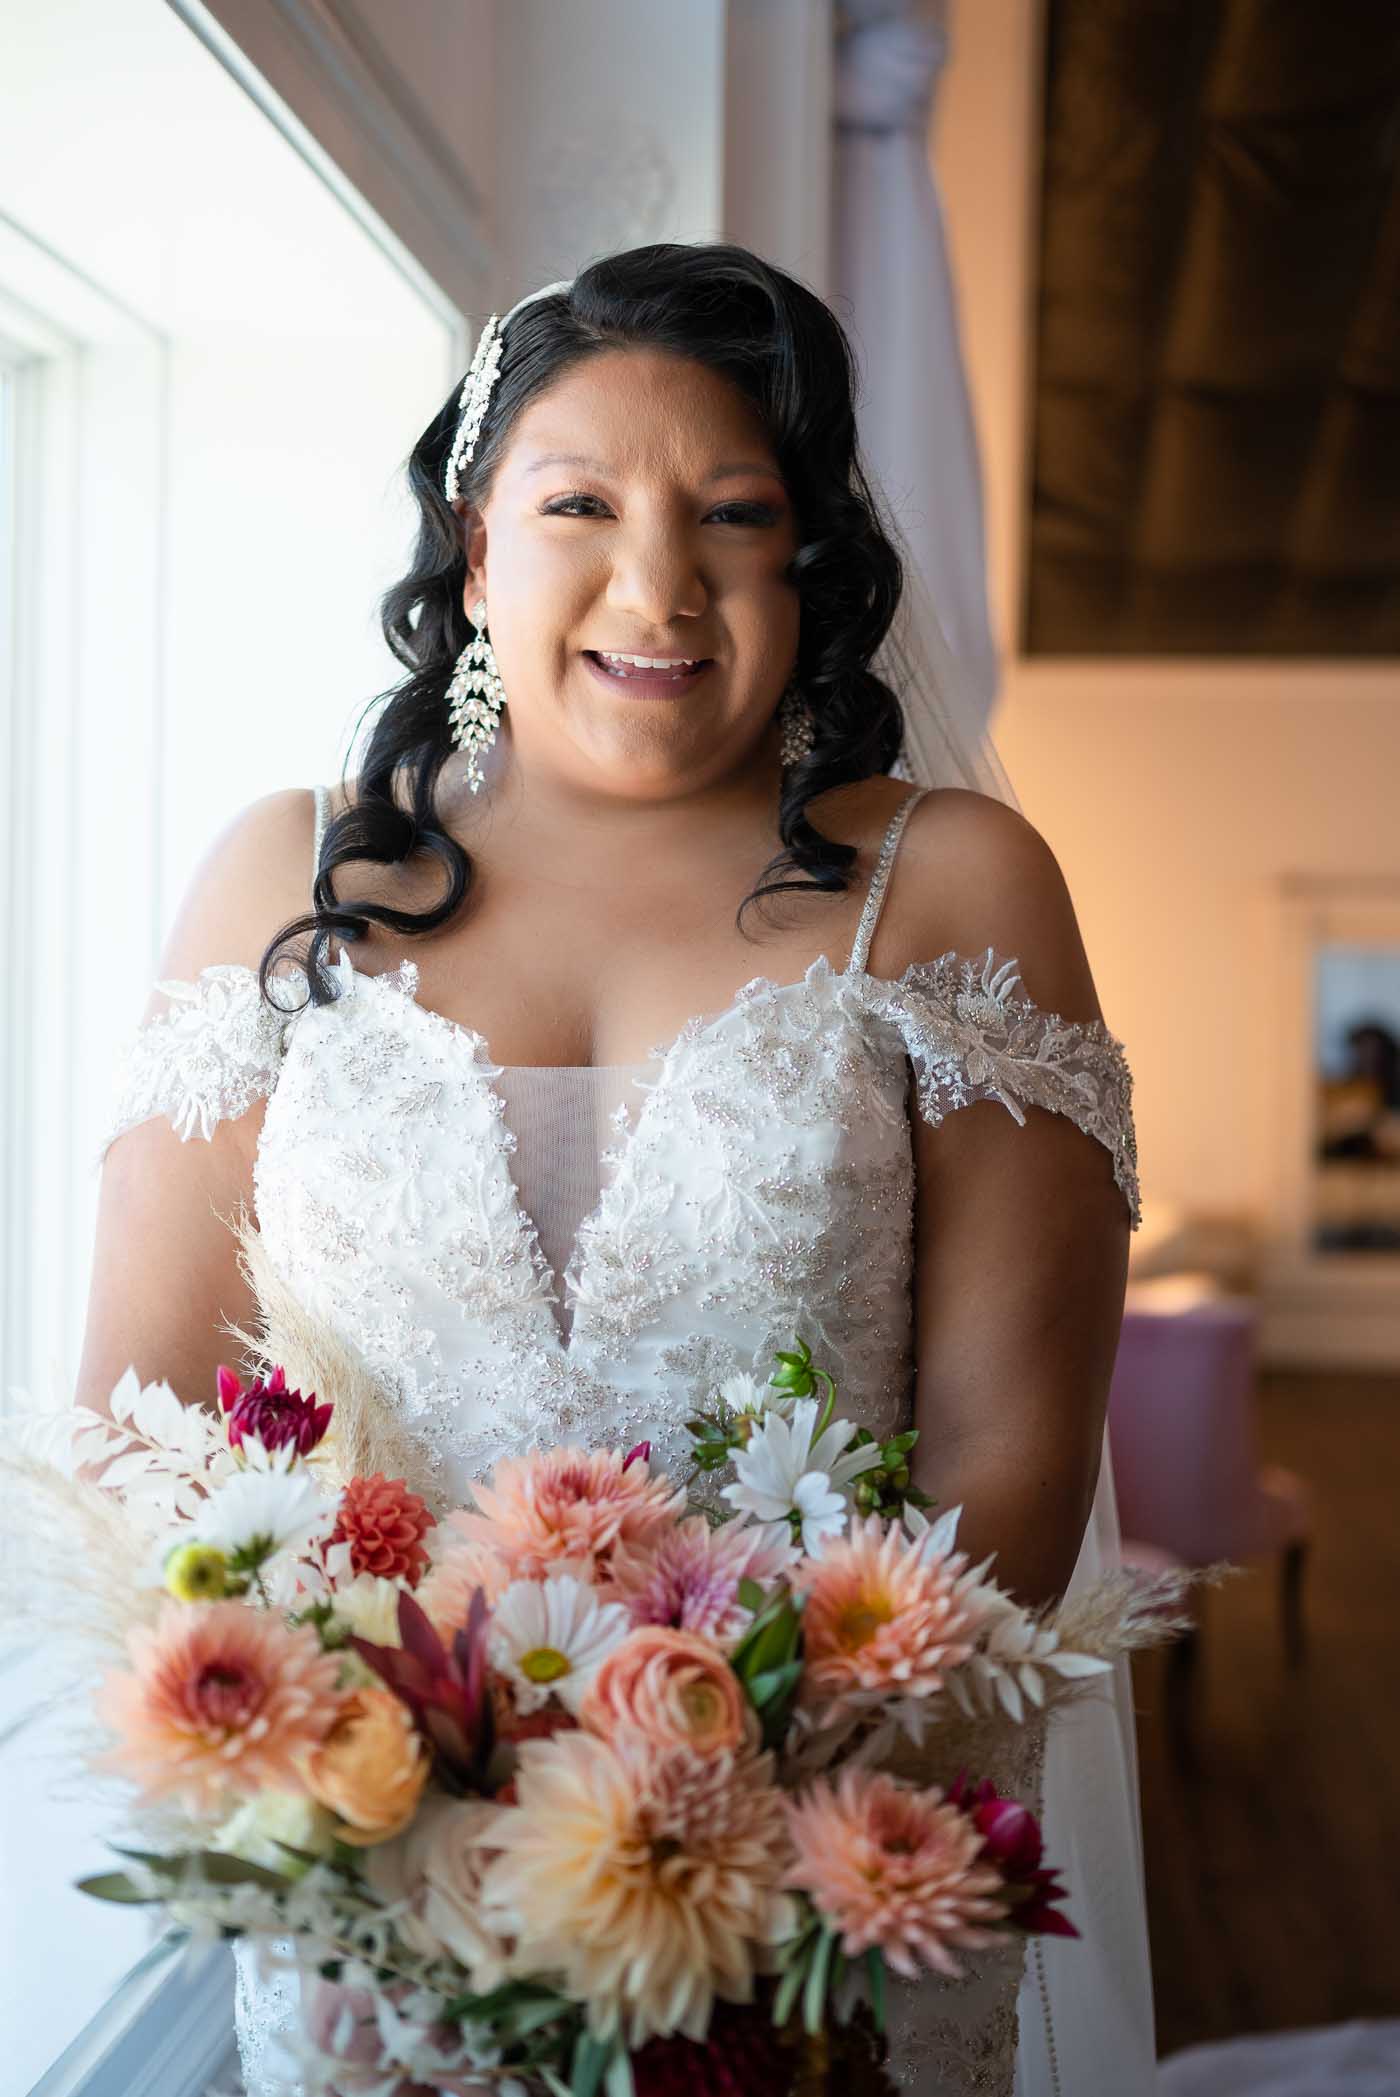 Bride smiling at camera near window